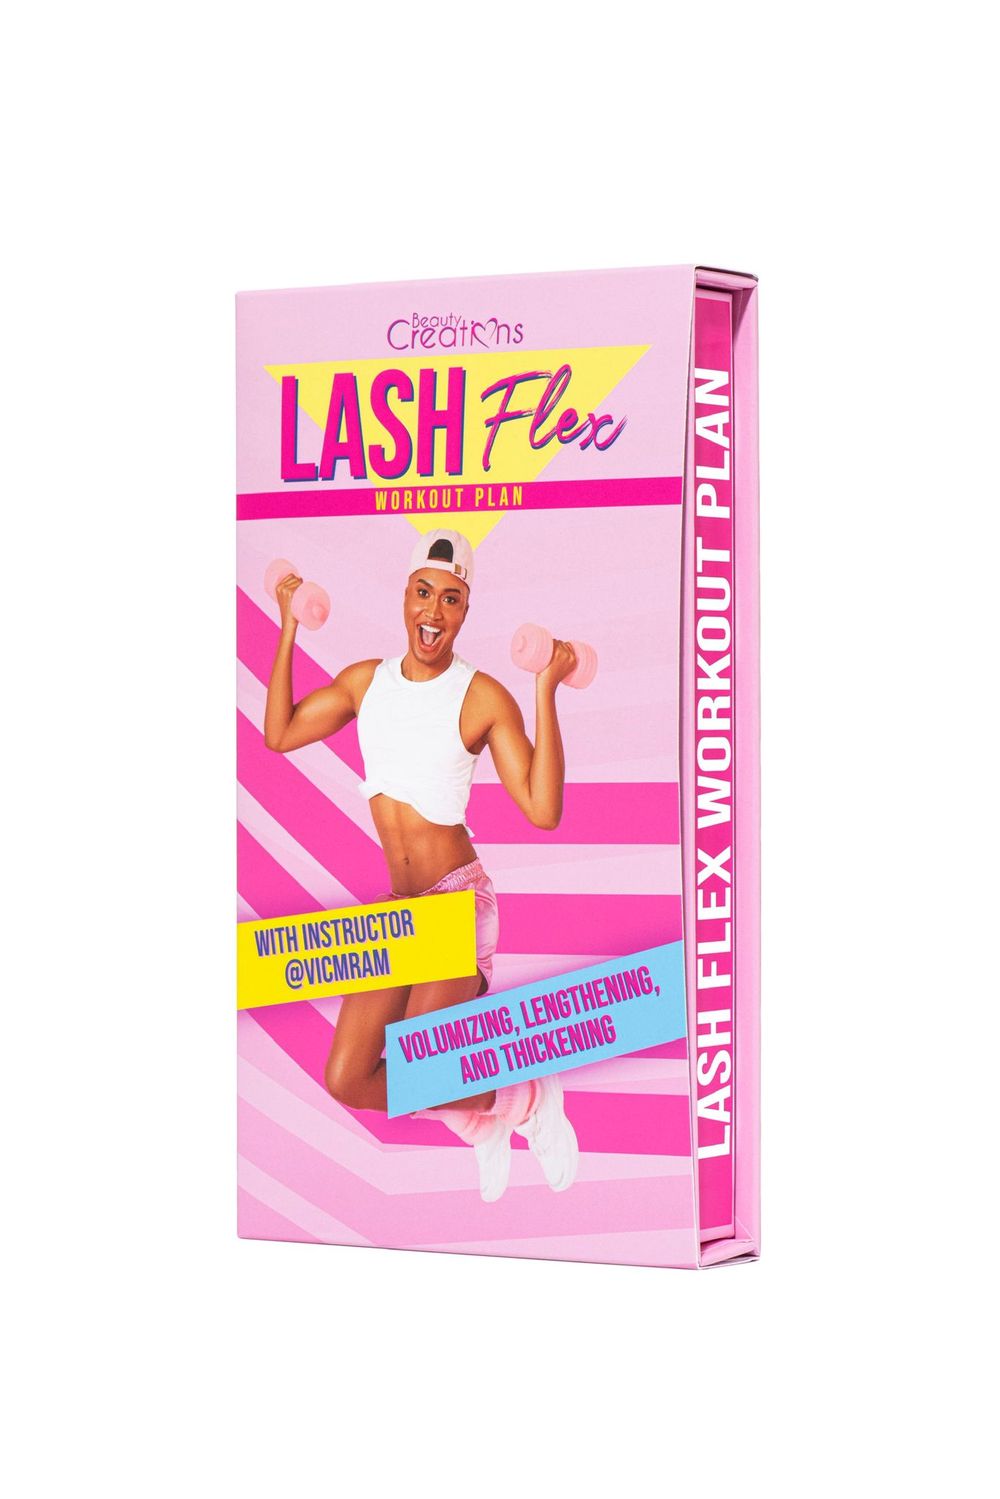 Beauty Creations - Lash Flex Mascara PR Set